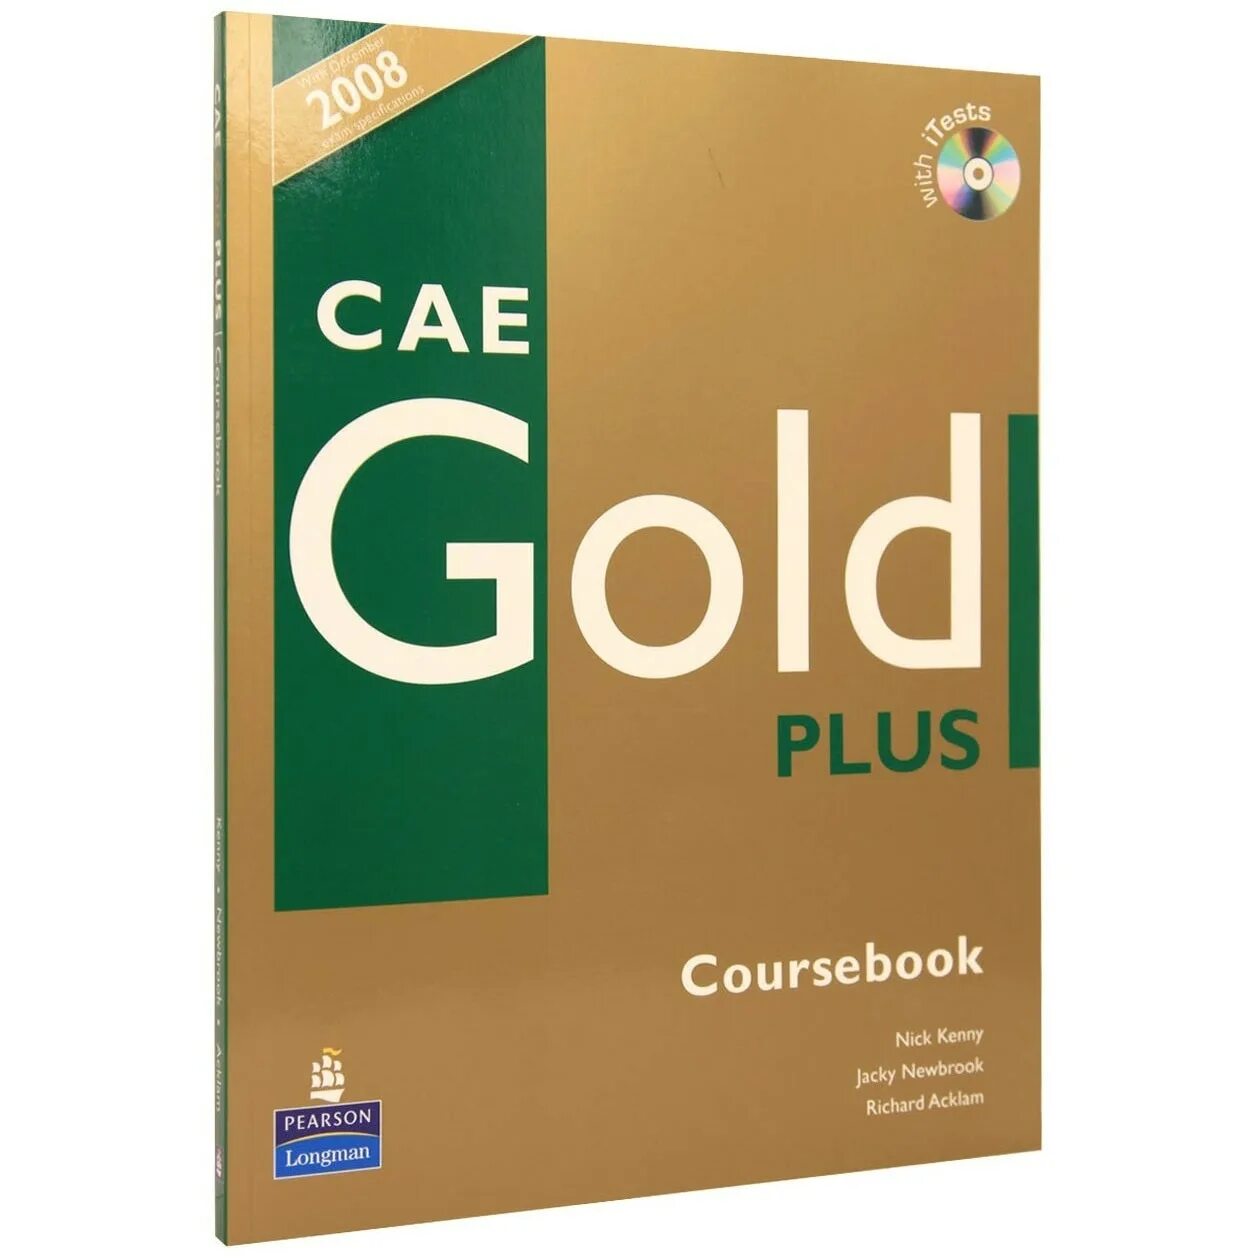 Gold advanced. CAE Gold Plus Coursebook. Gold Advanced CAE Coursebook. FCE Gold Plus Coursebook. Gold Advanced Coursebook 2015.